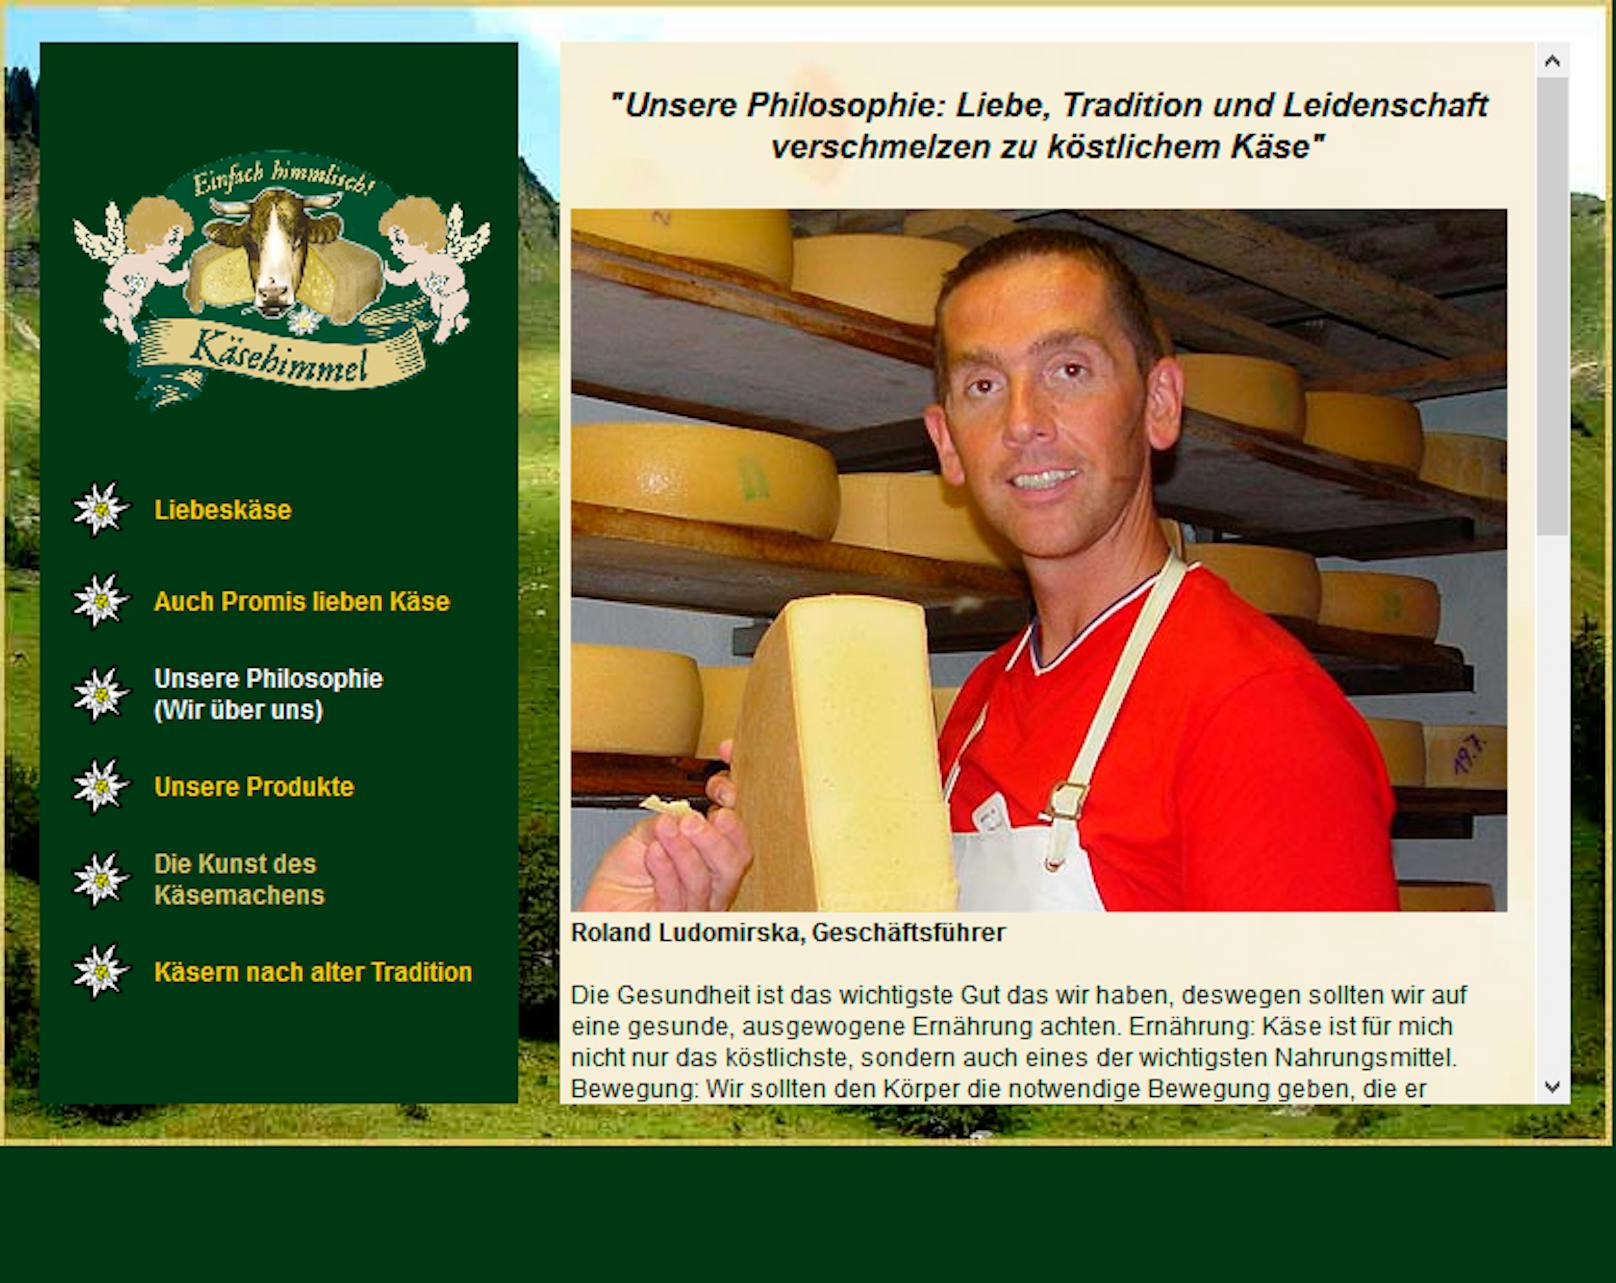 Roland Ludomirska ist schon länger im Käsebusiness tätig